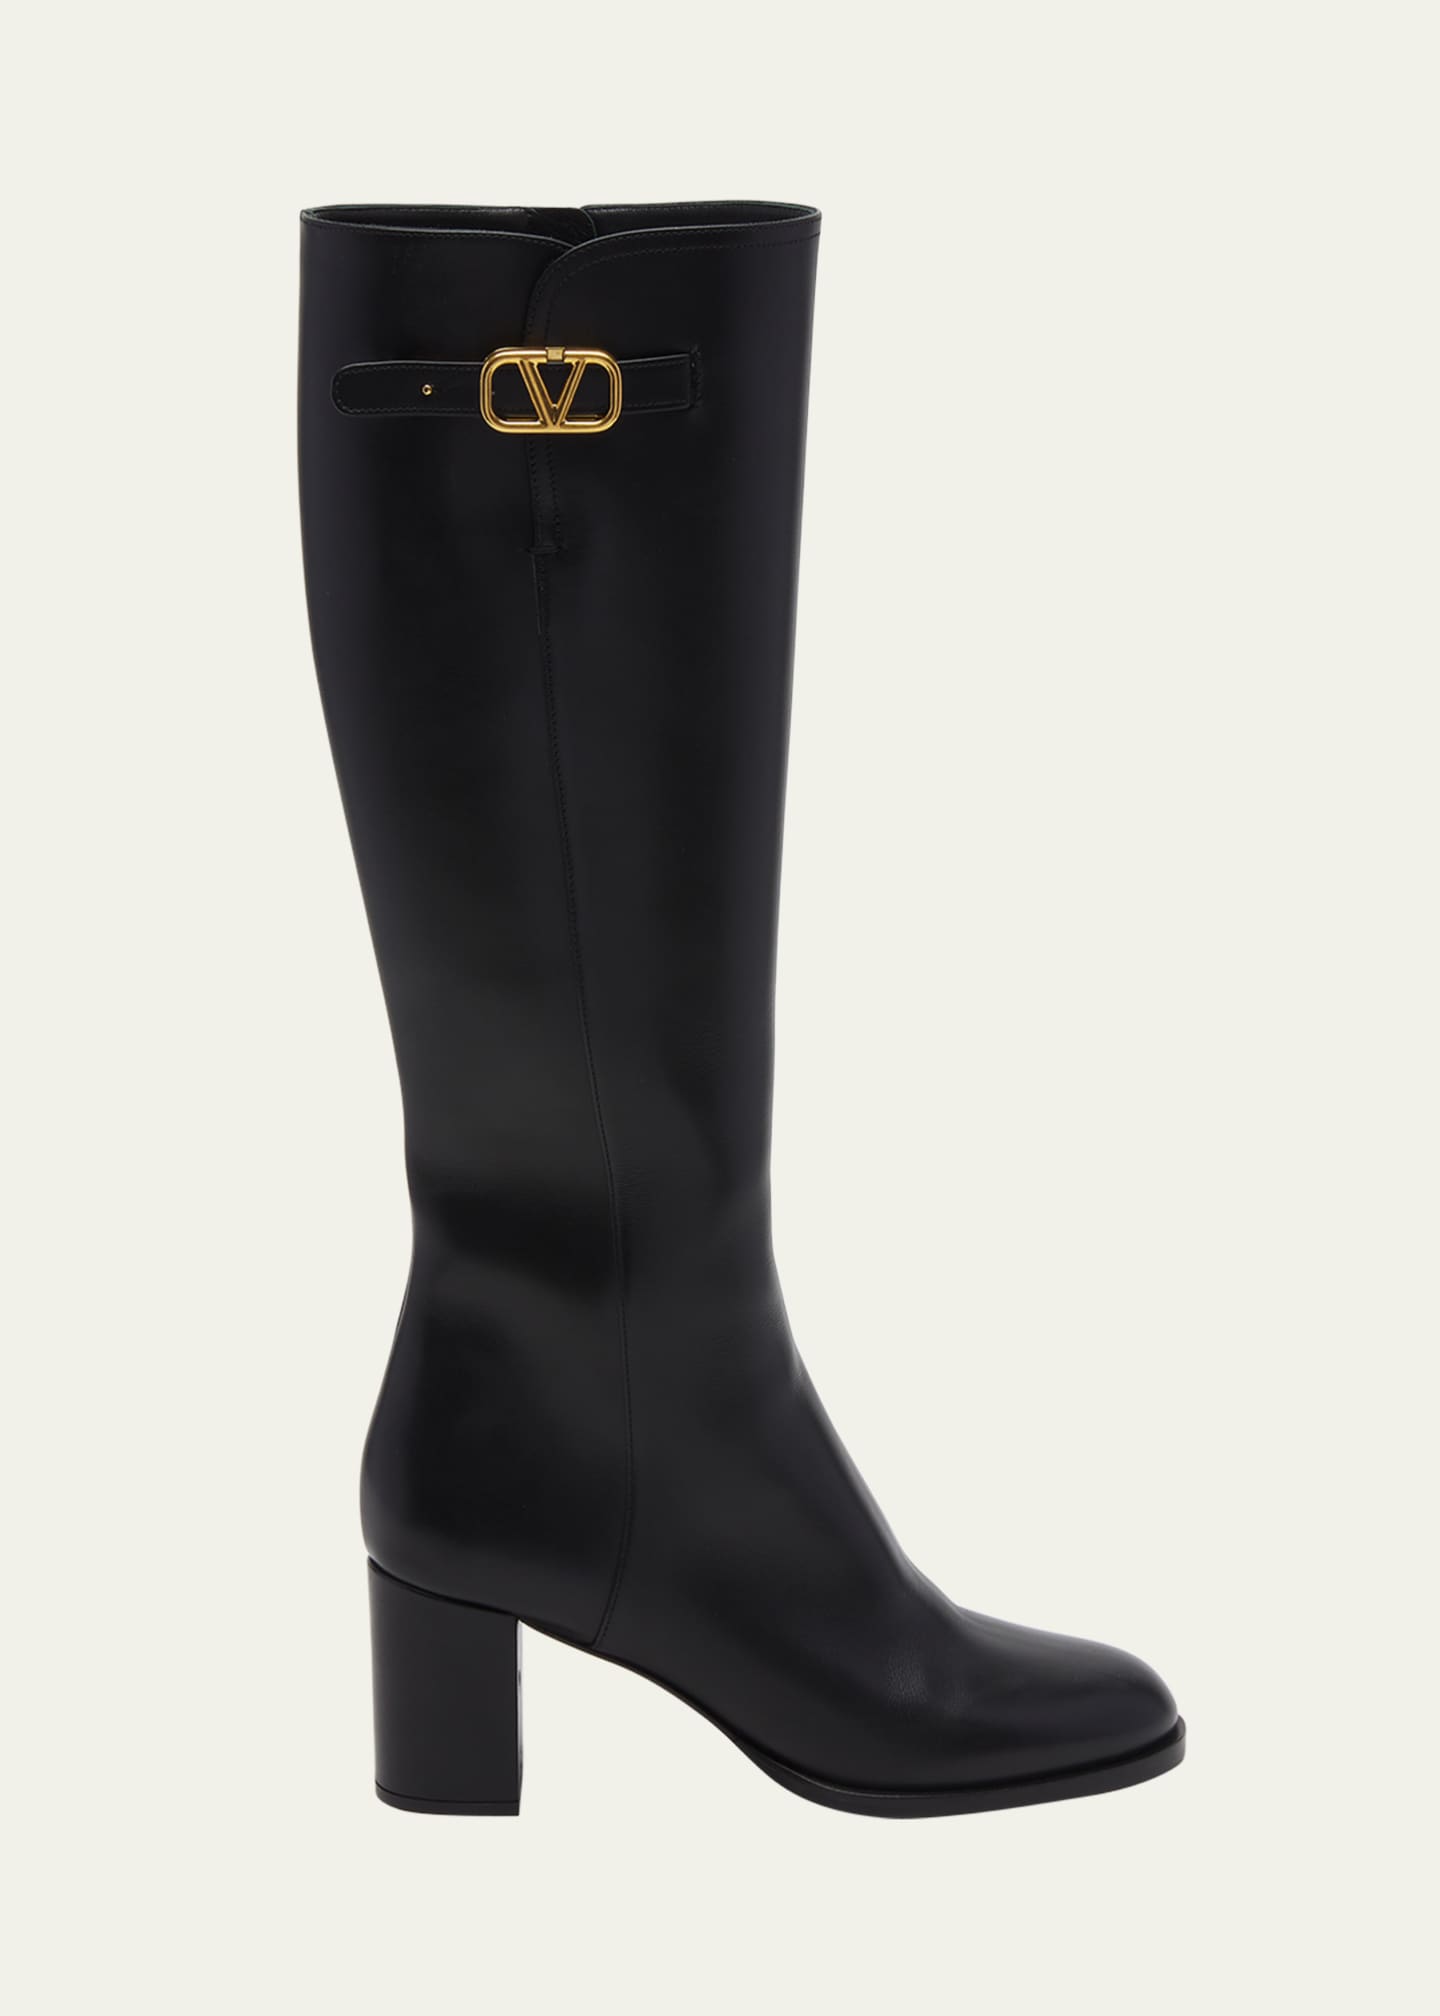 Black V-Logo 70 leather knee-high boots, Valentino Garavani